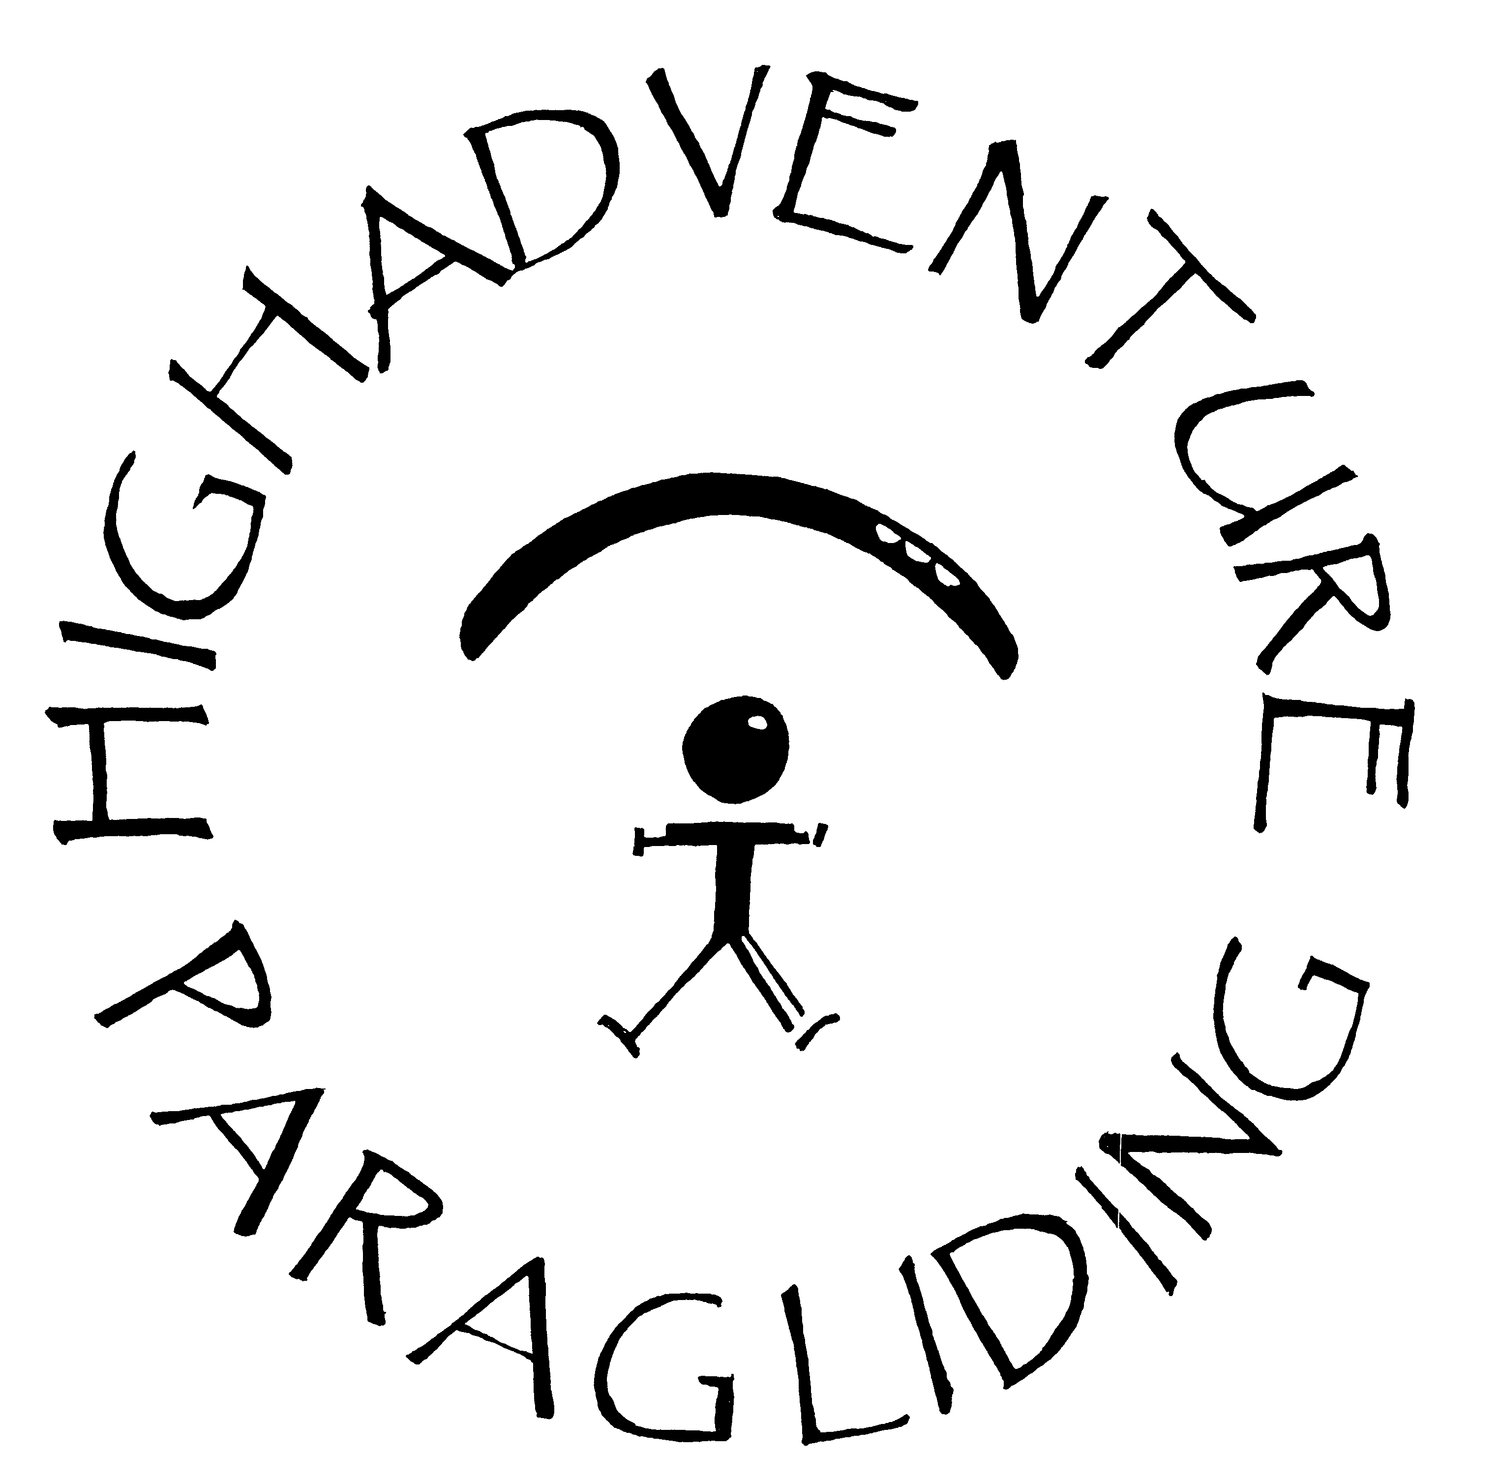 High Adventure Paragliding